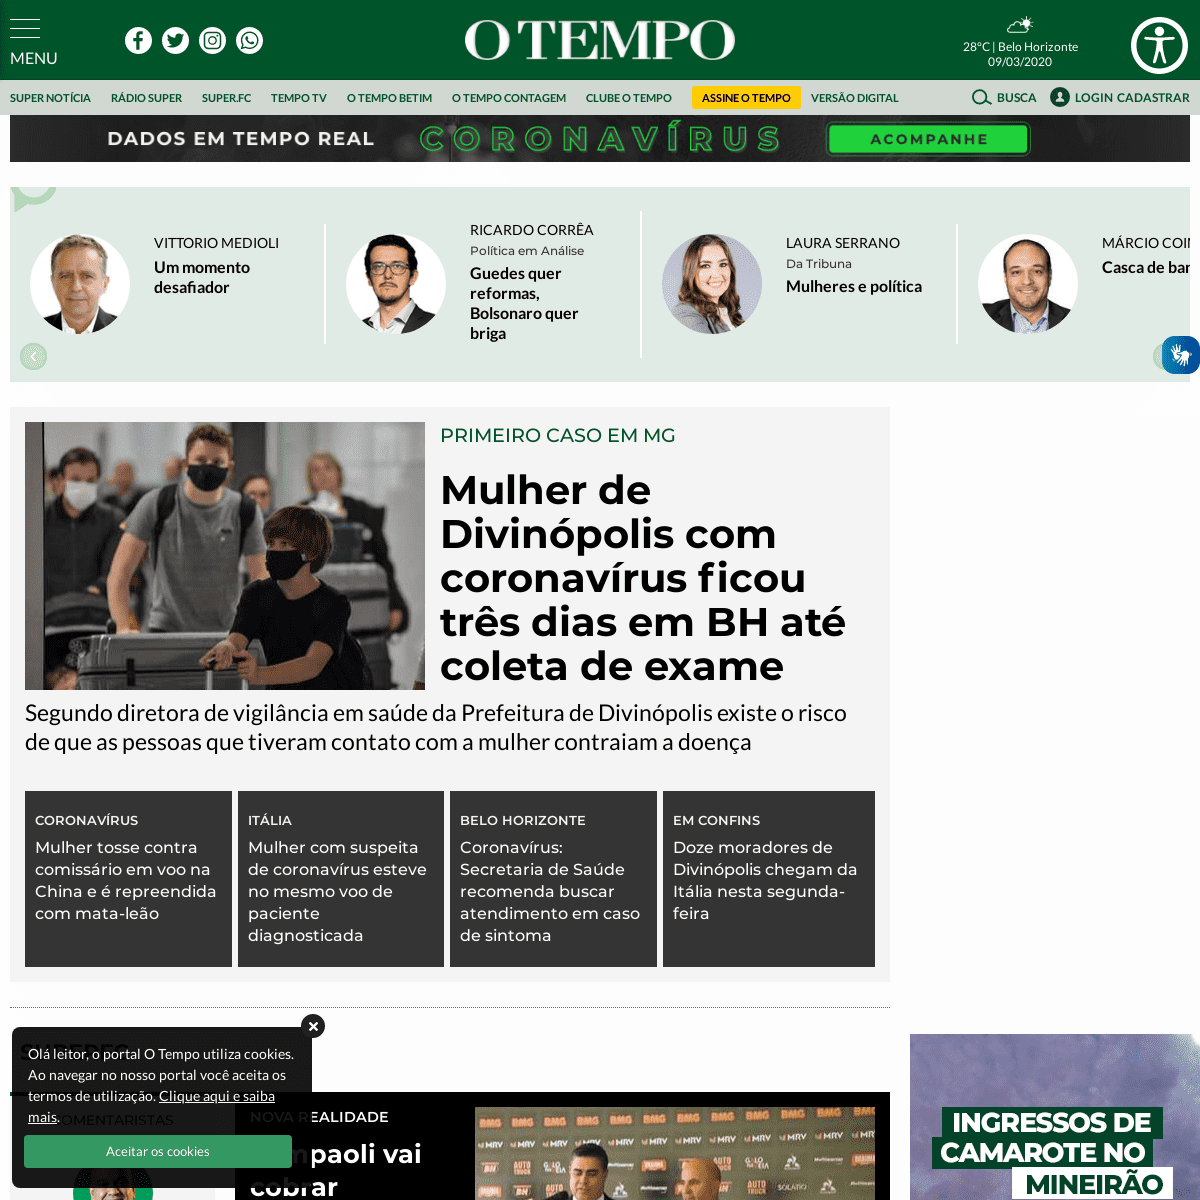 A complete backup of otempo.com.br